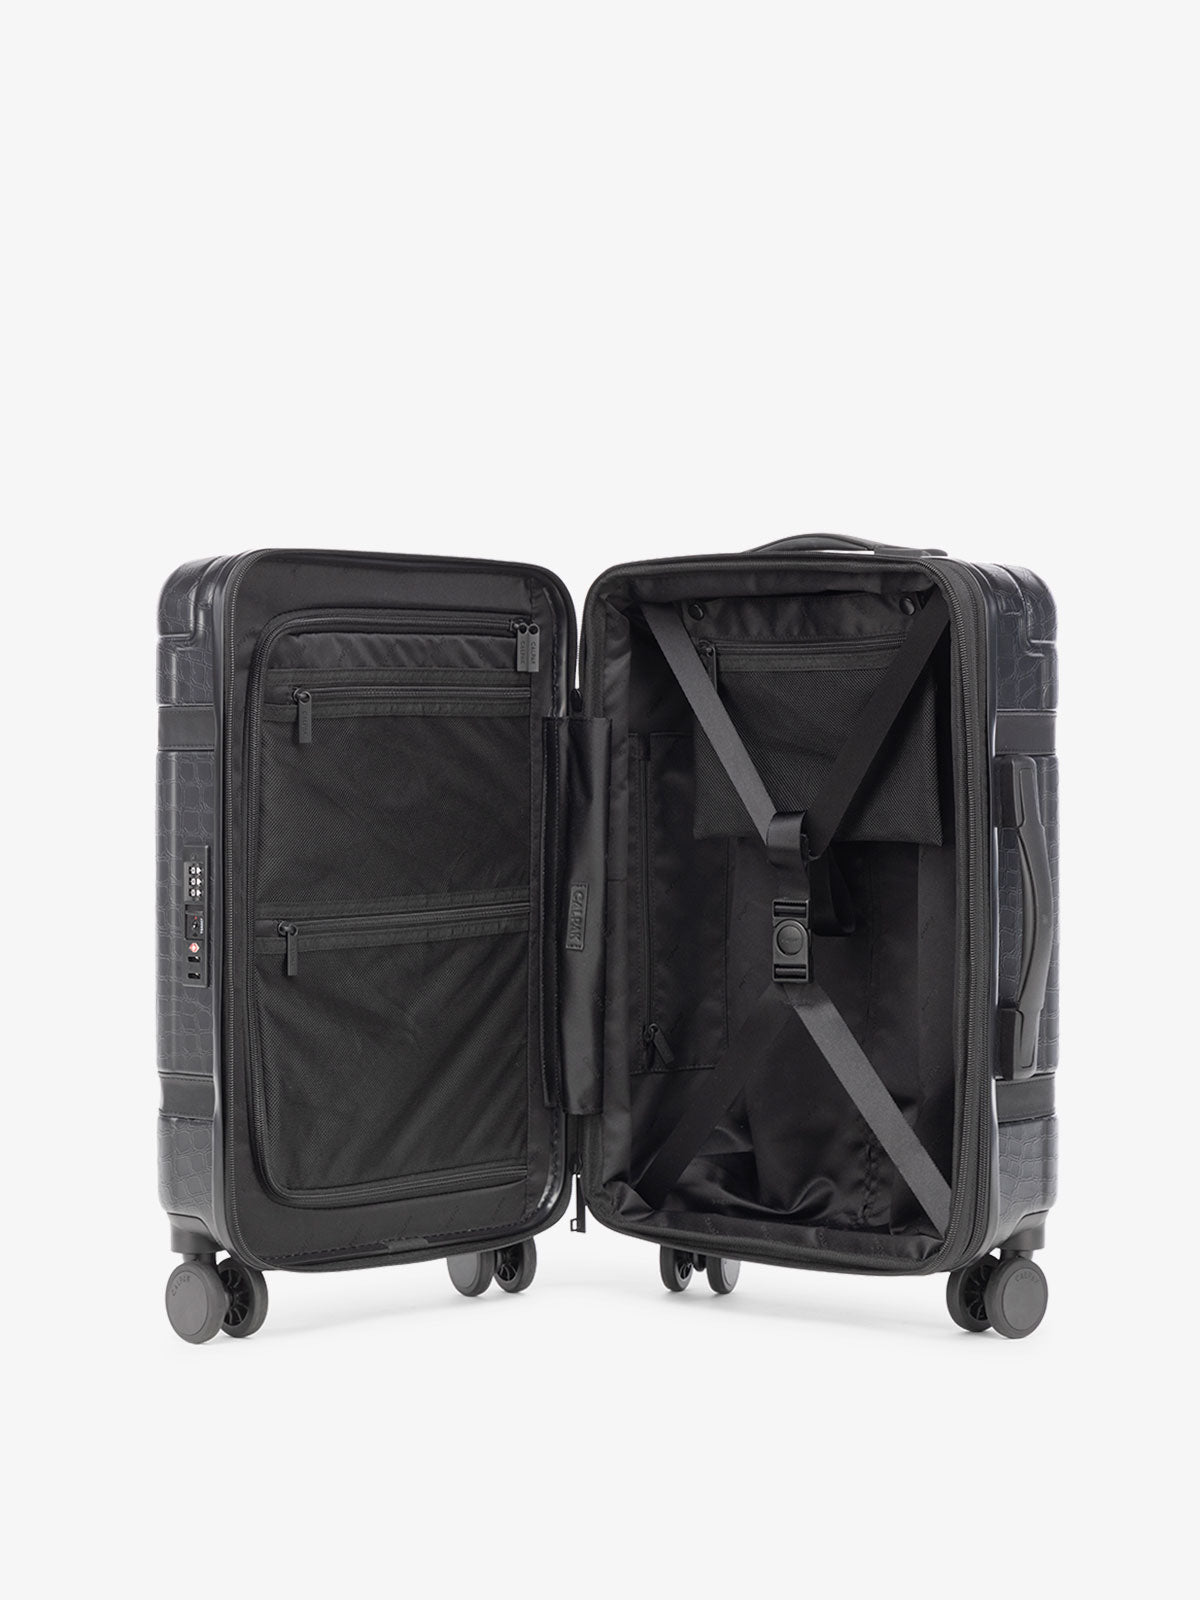 black vintage trunk style CALPAK TRNK luggage with compression straps